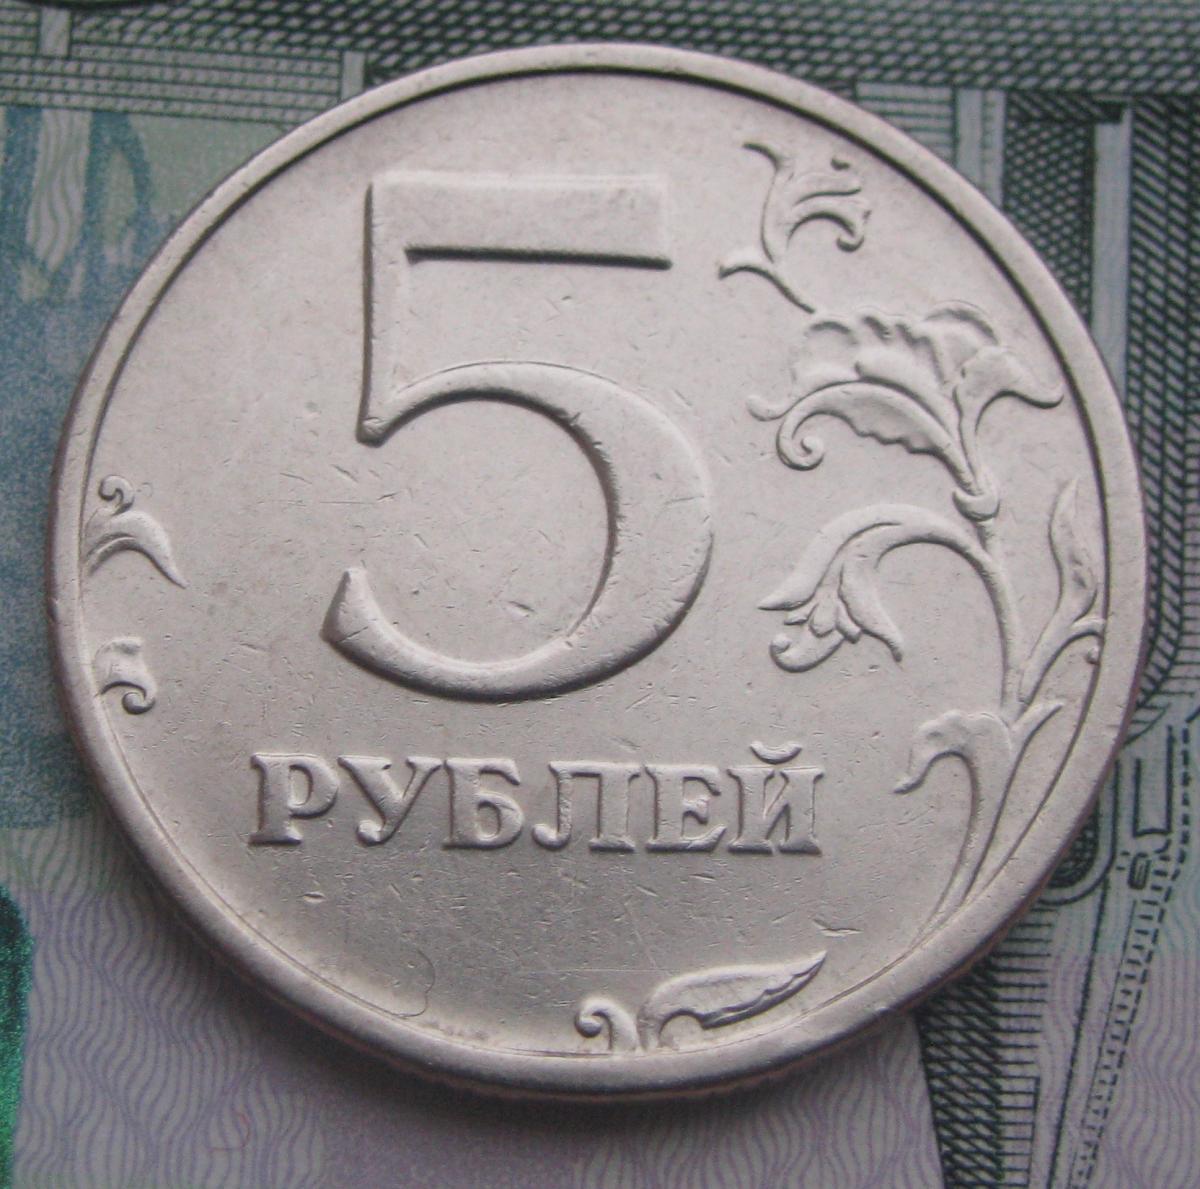 Авито 5 рублей